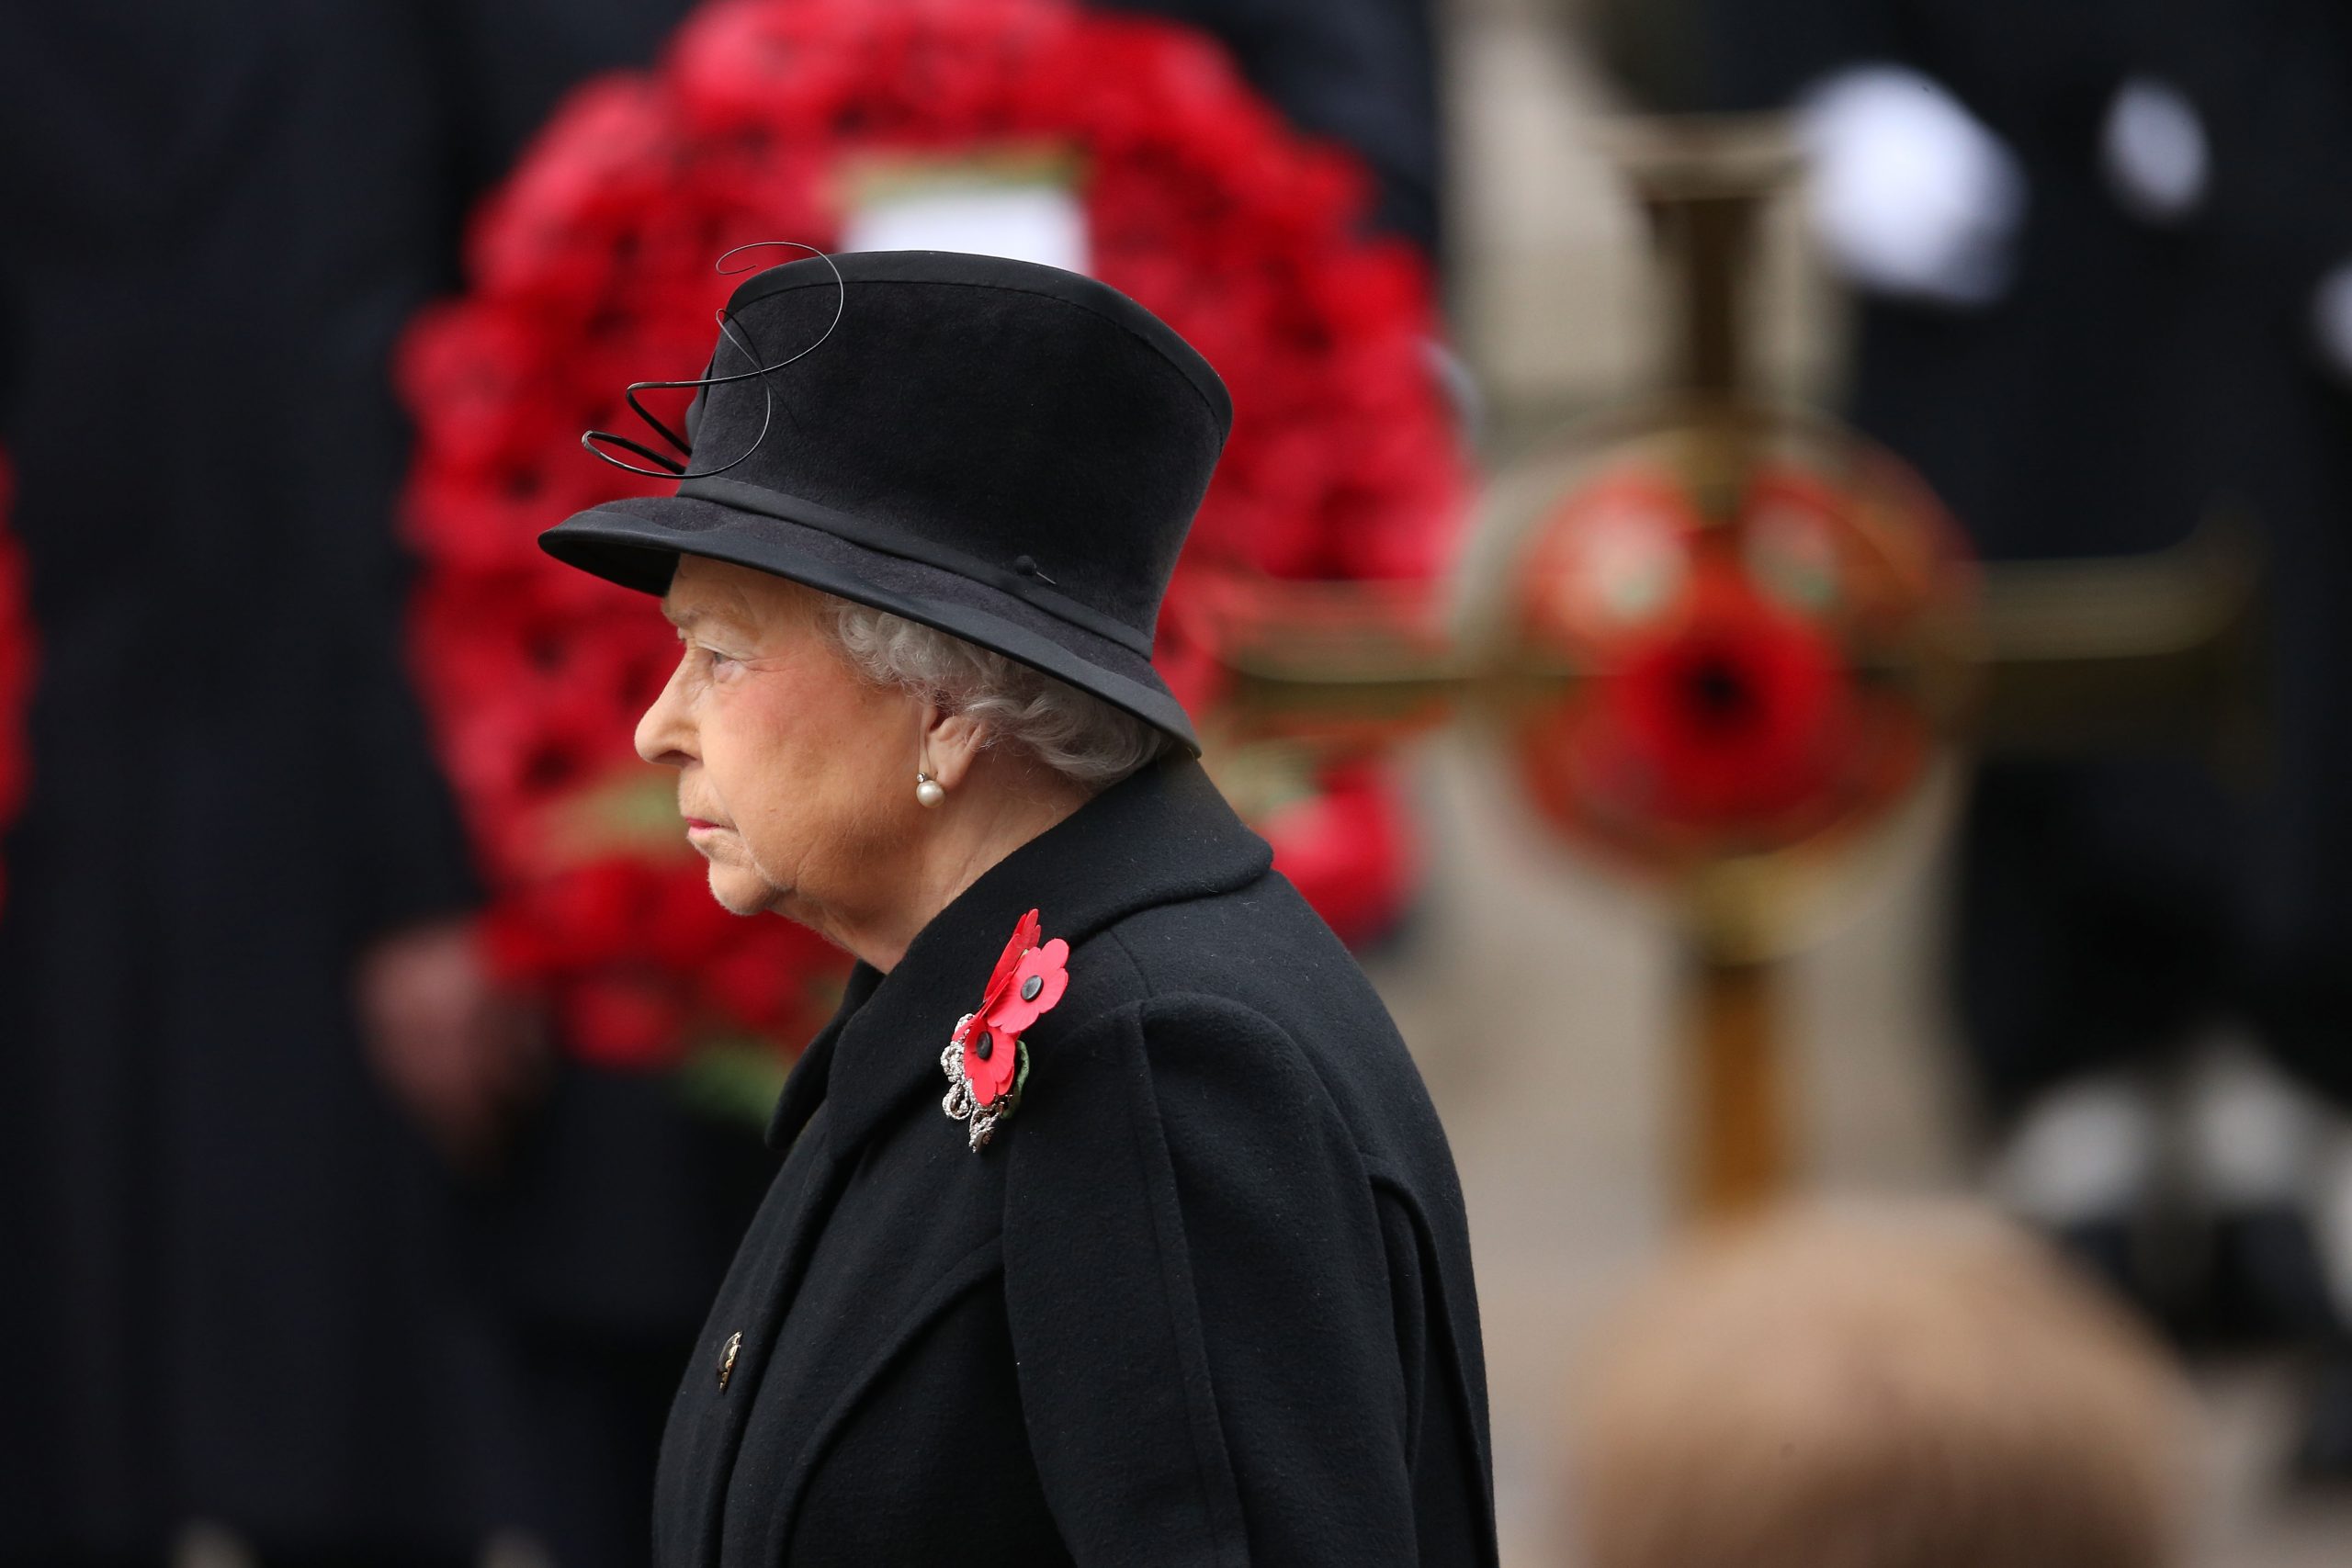 Fotografia Rainha Elizabeth Remembrance Day monarquia realeza 